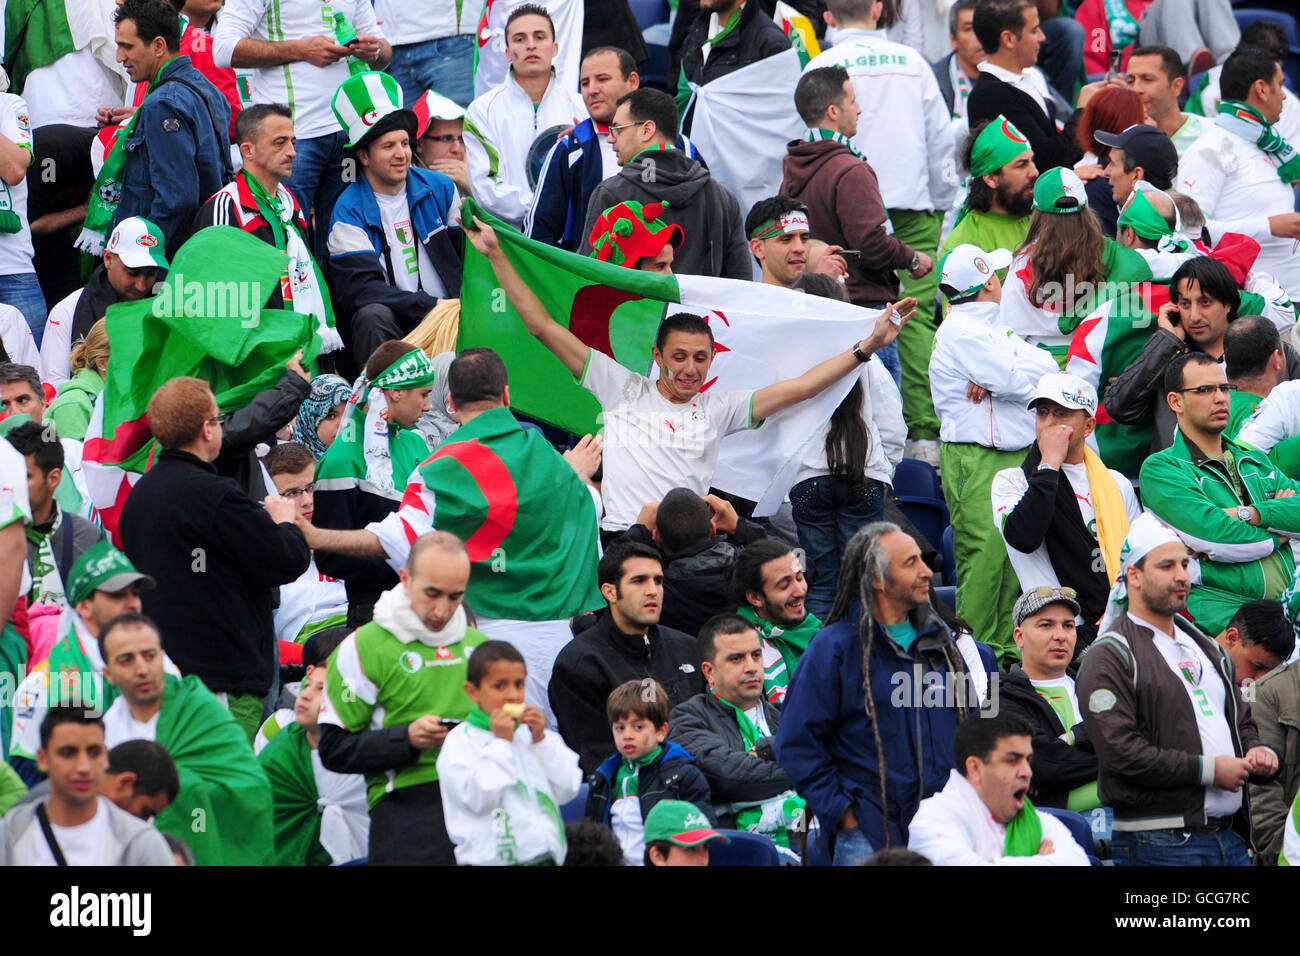 Soccer - International Friendly - Republic of Ireland v Algeria - RDS Stadium. Algeria fans in the stands. Stock Photo